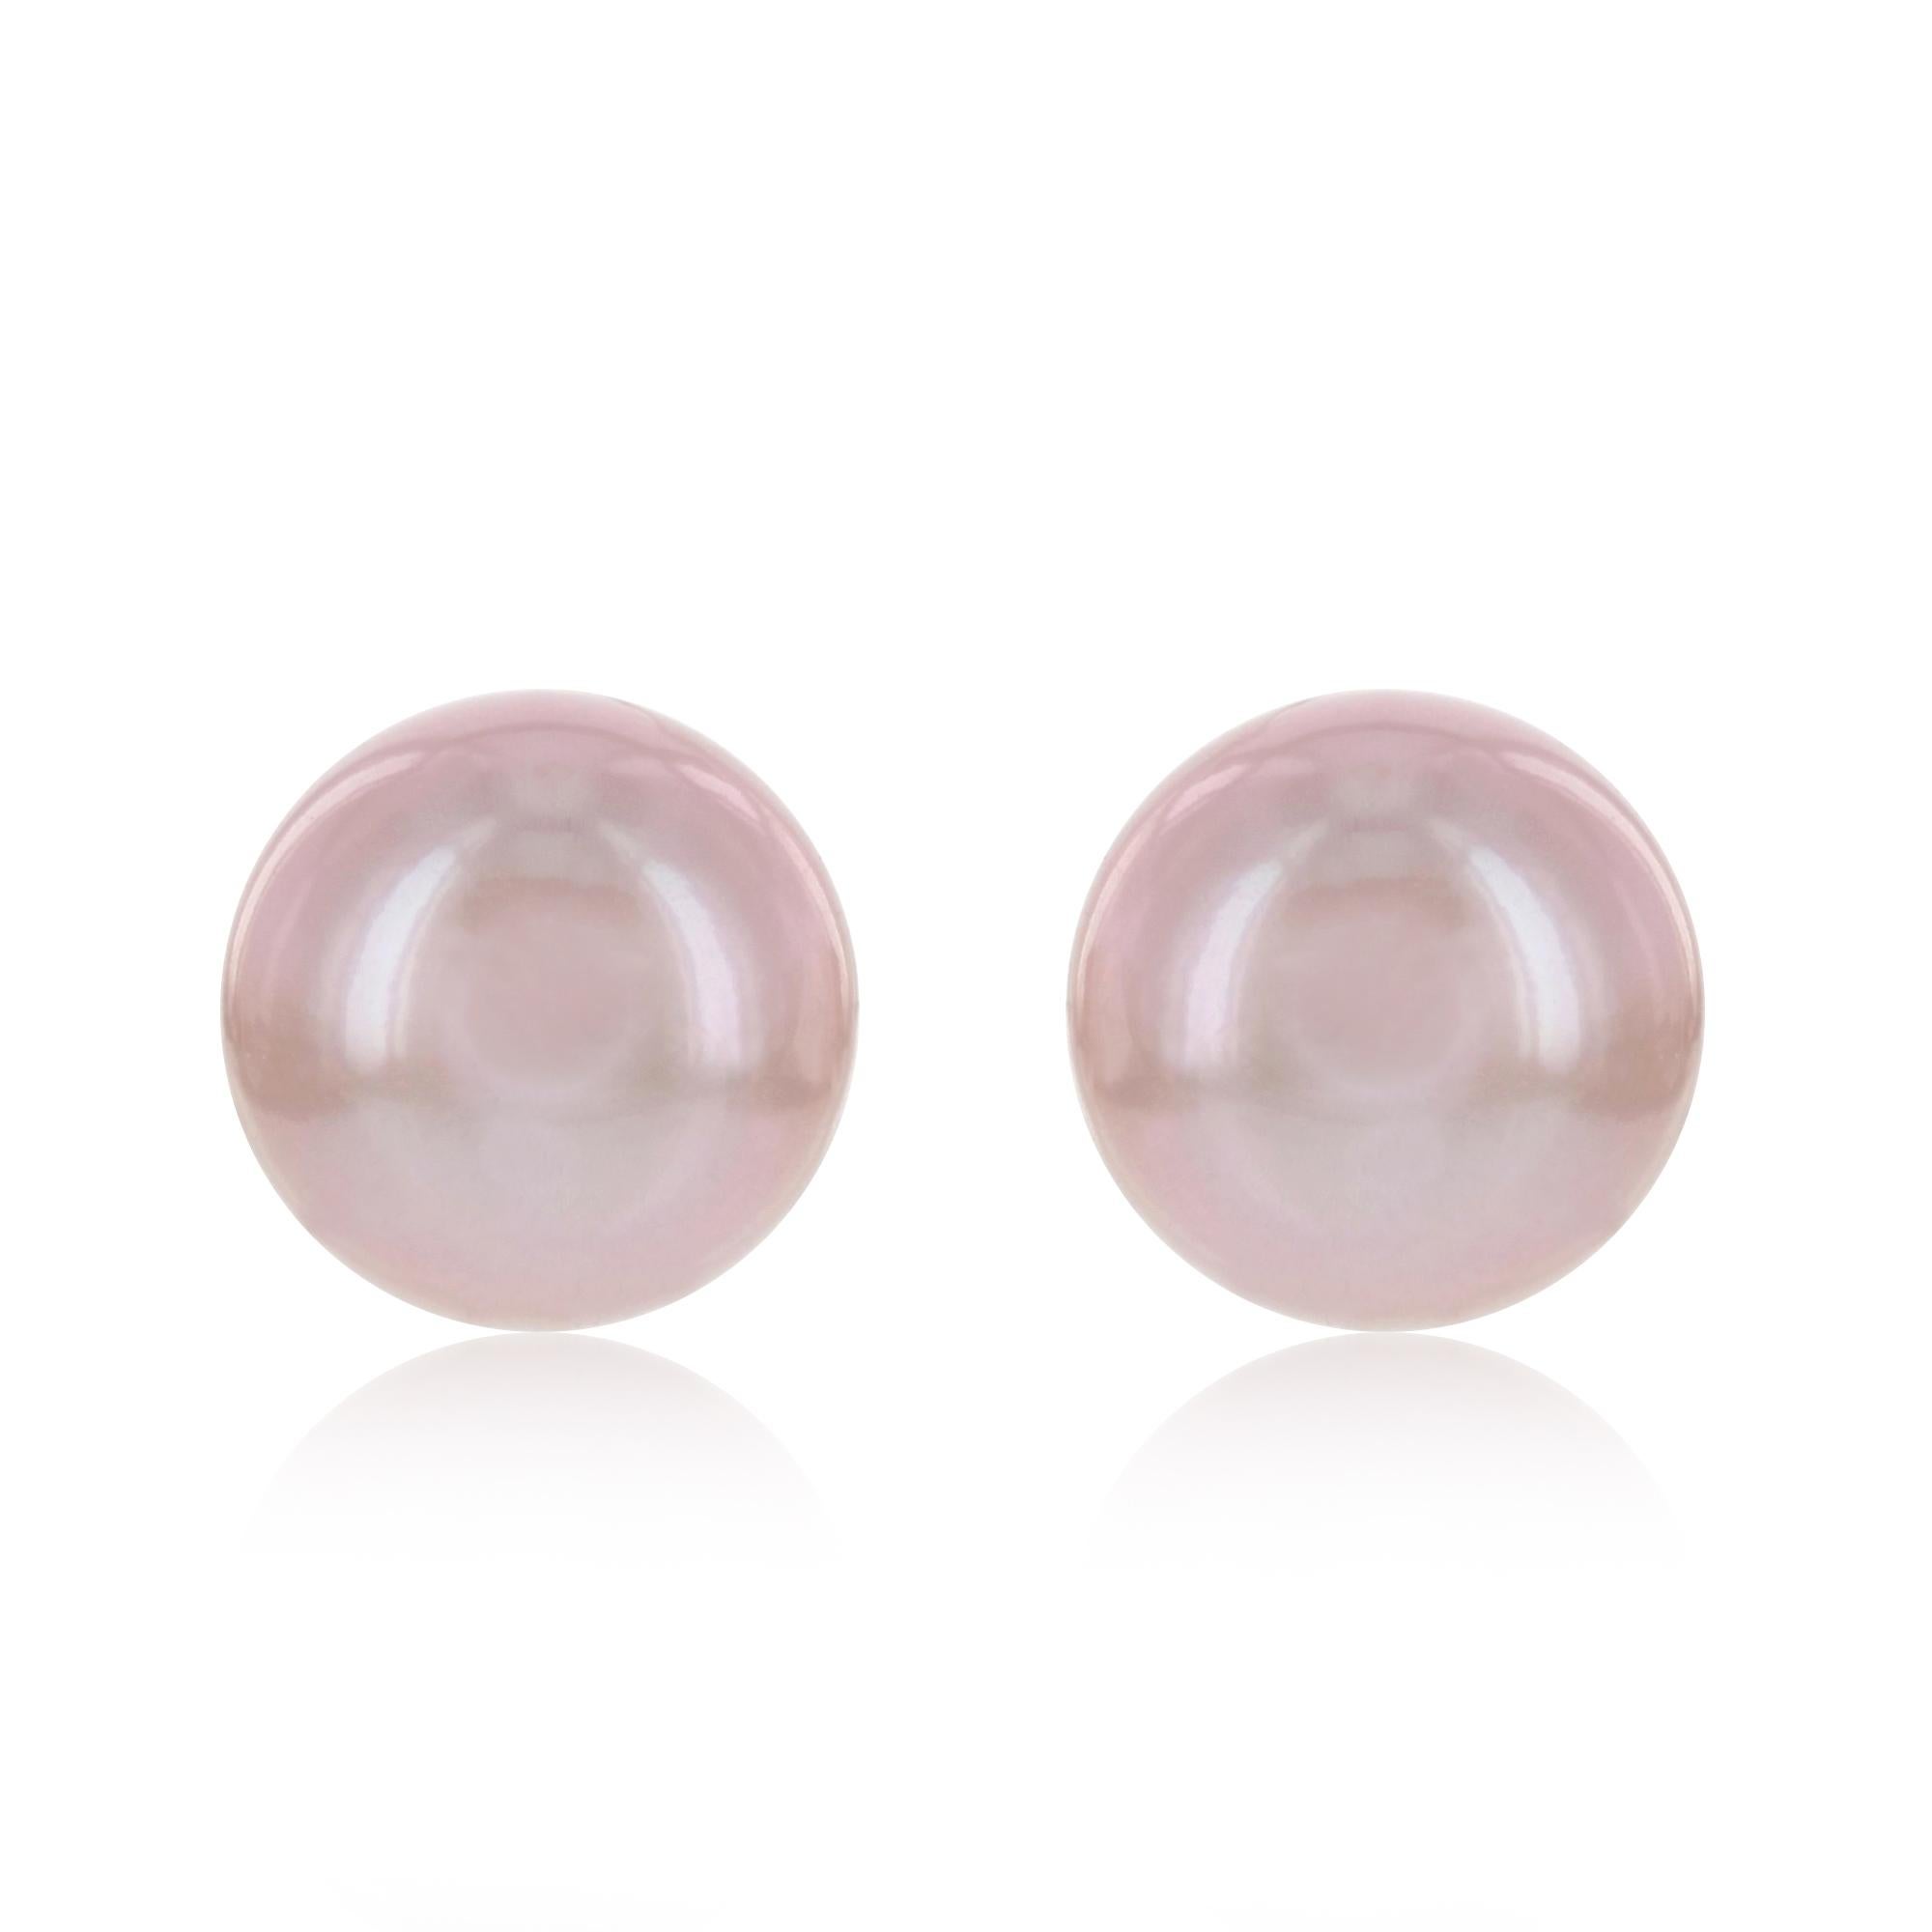 10 mm pearl earrings